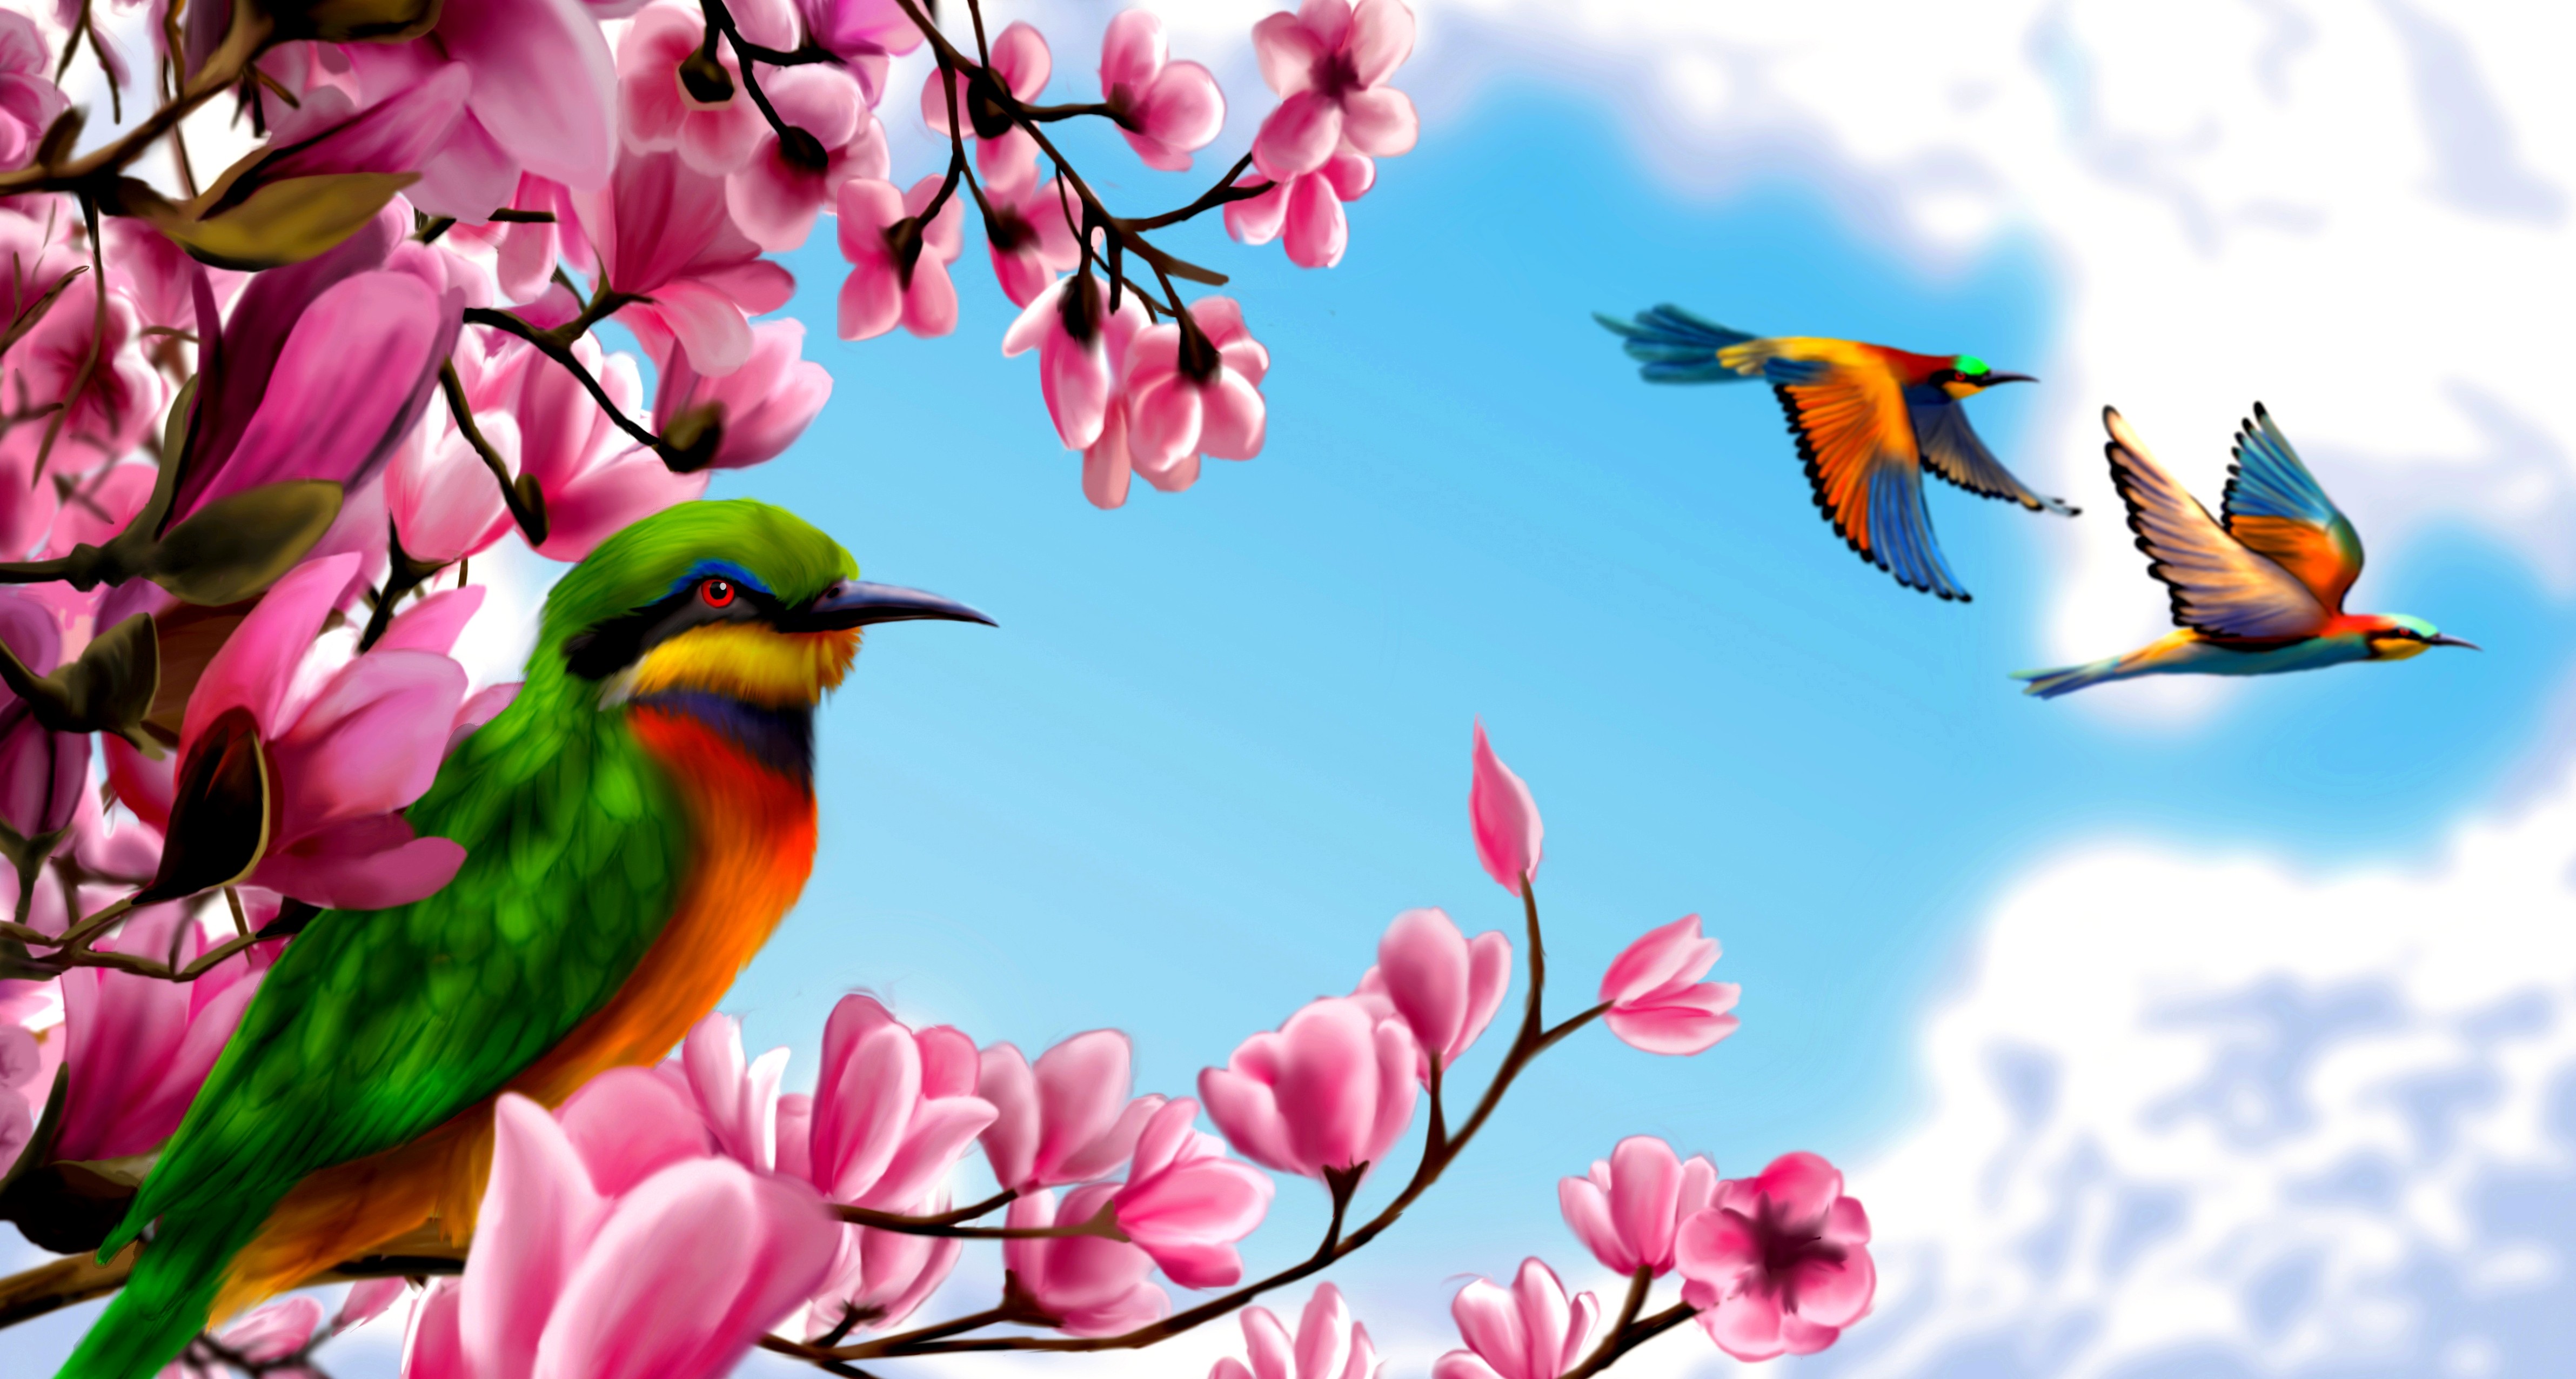 Birds in paradise wallpaper. PC